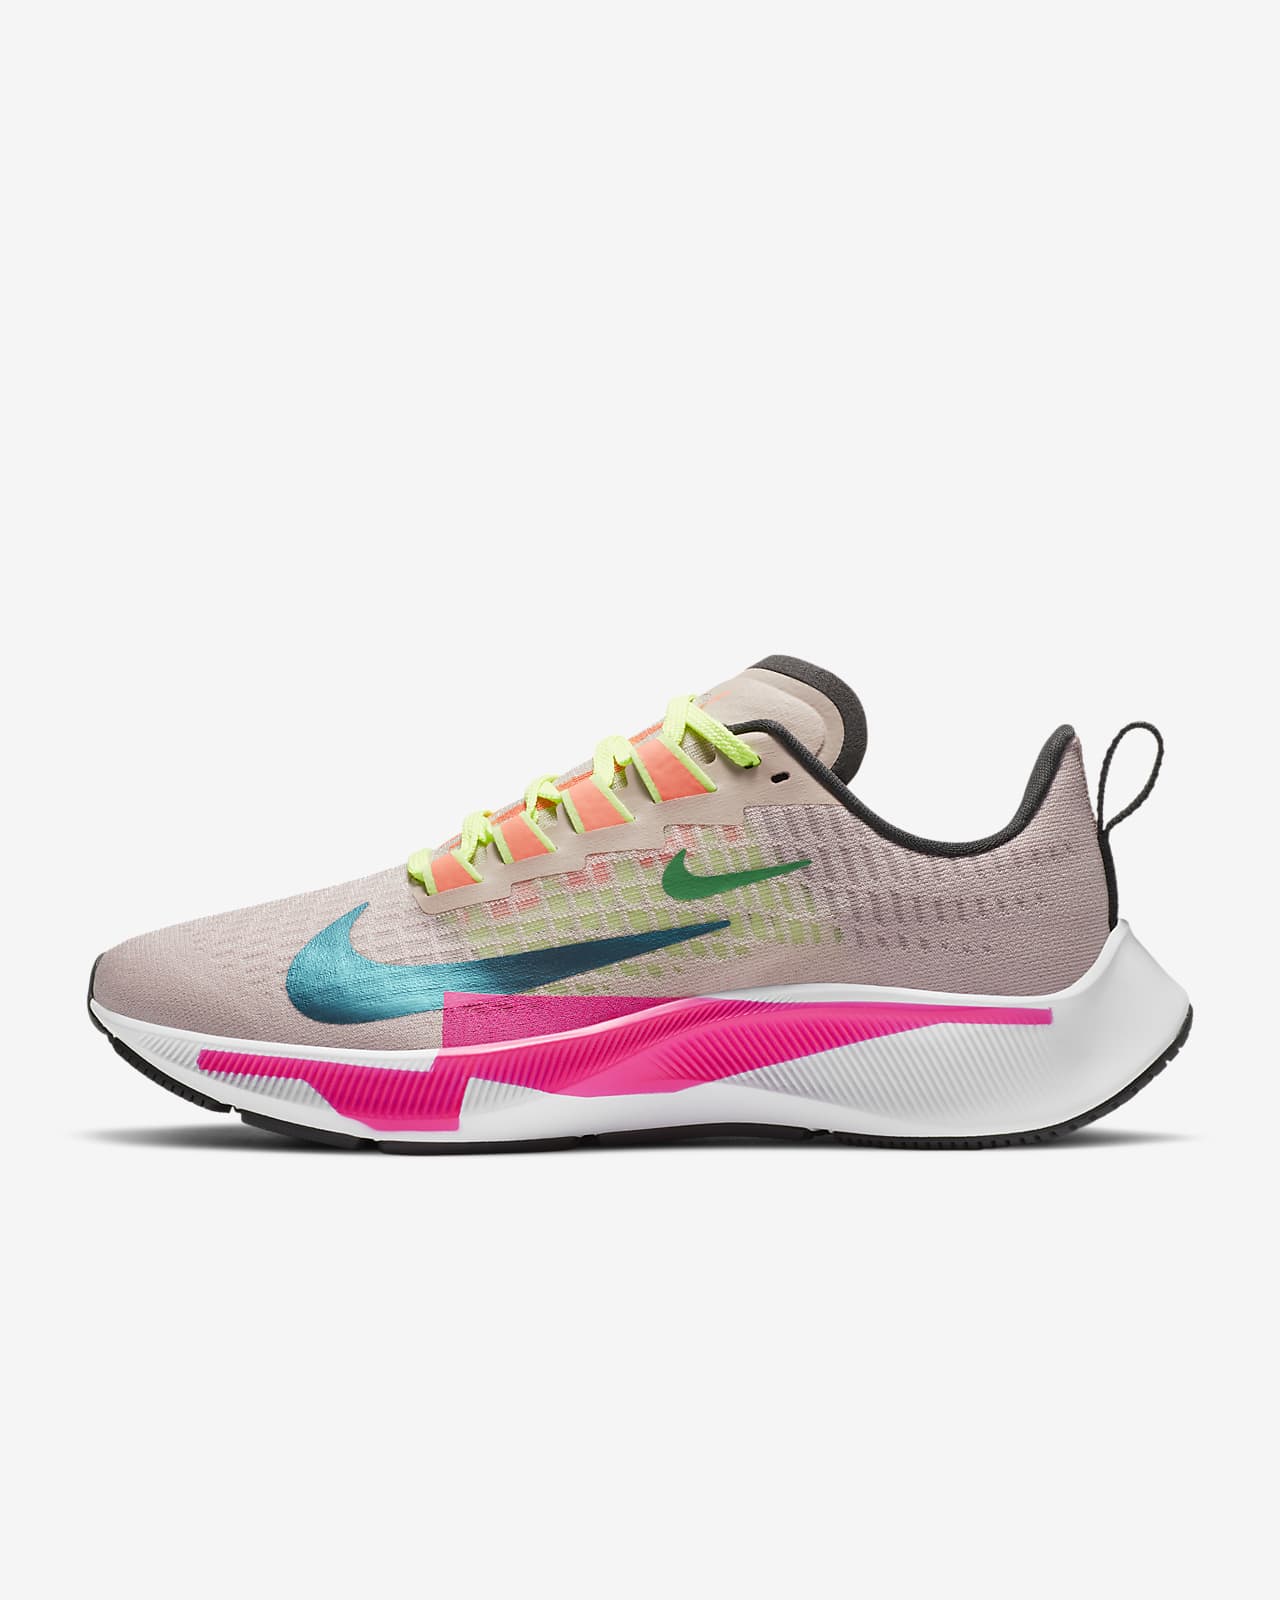 Chaussure de running Nike Air Zoom Pegasus 37 Premium pour Femme